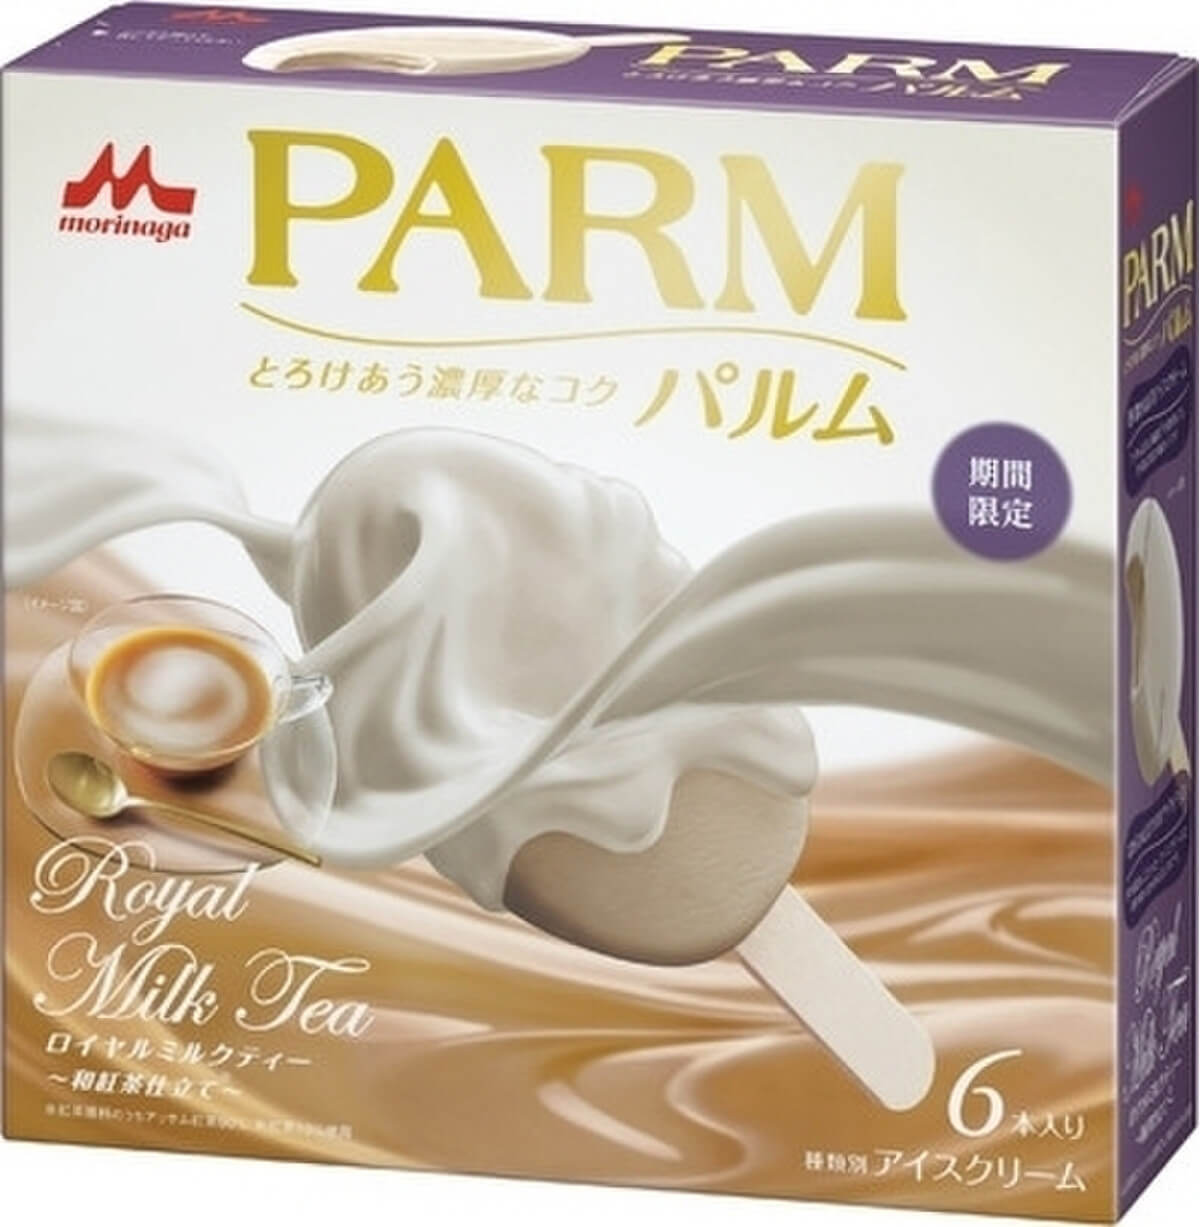 PARM Royal Milk Tea パルムロイヤルミルクティー